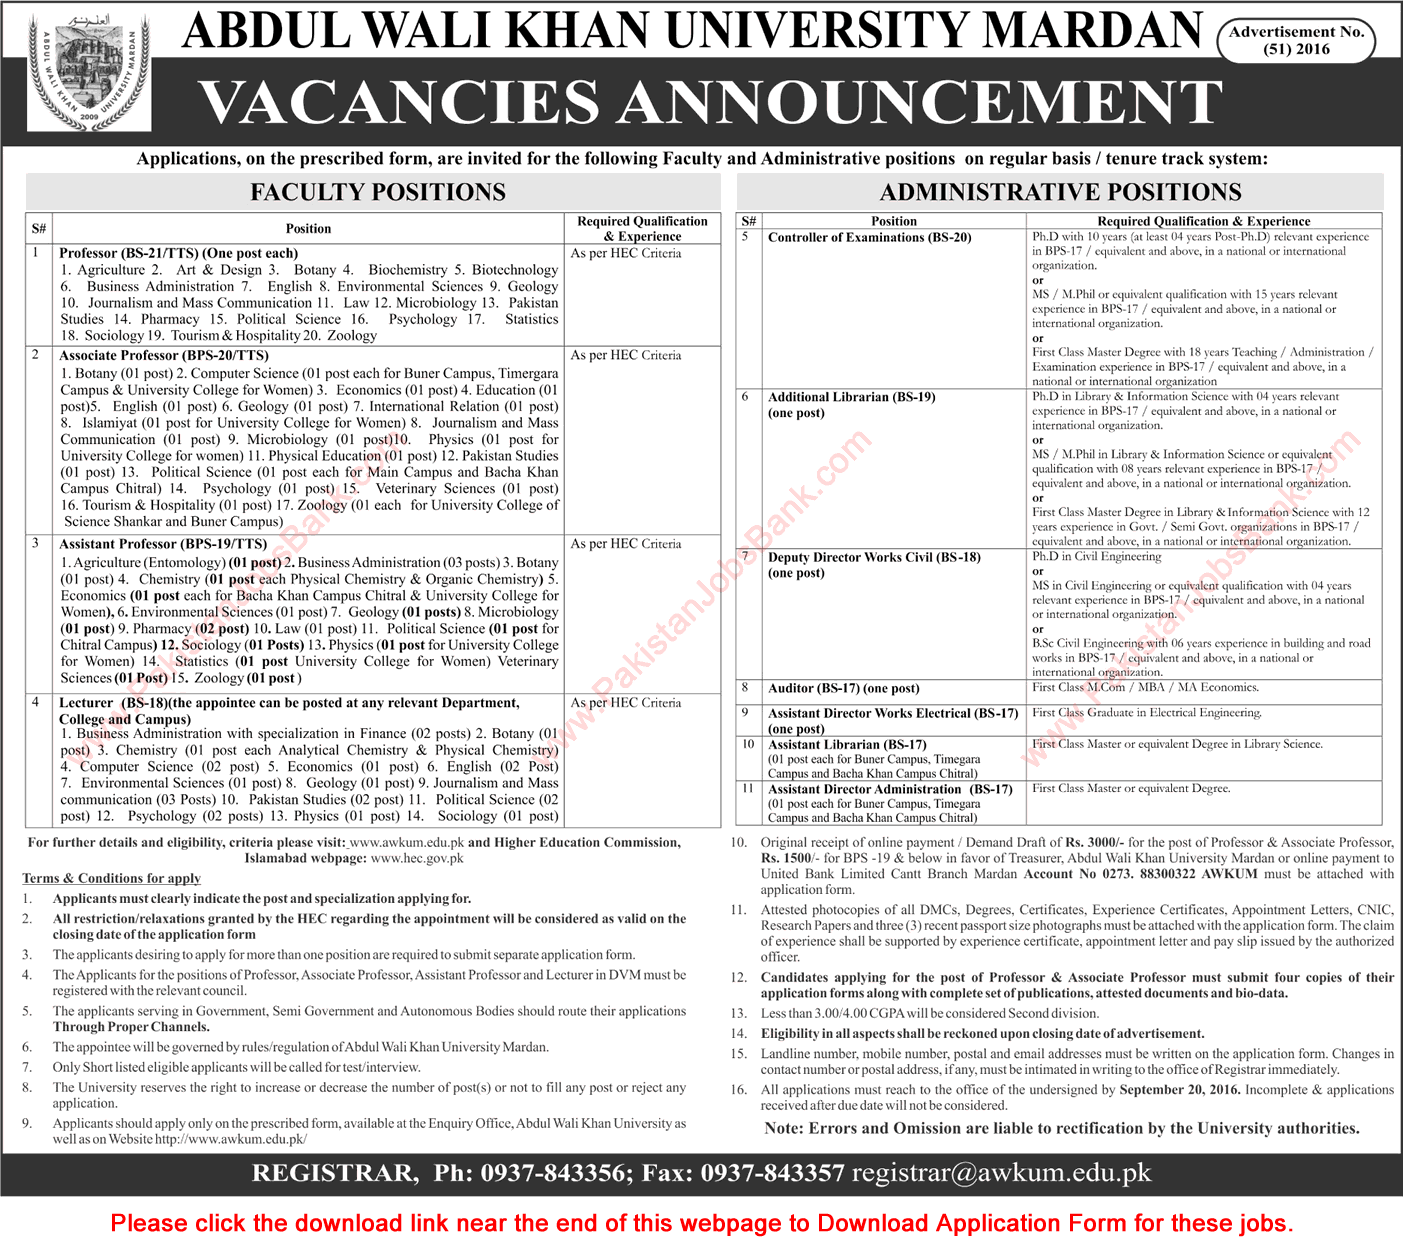 Abdul Wali Khan University Mardan Jobs September 2016 Application Form Teaching Faculty & Admin Staff Latest